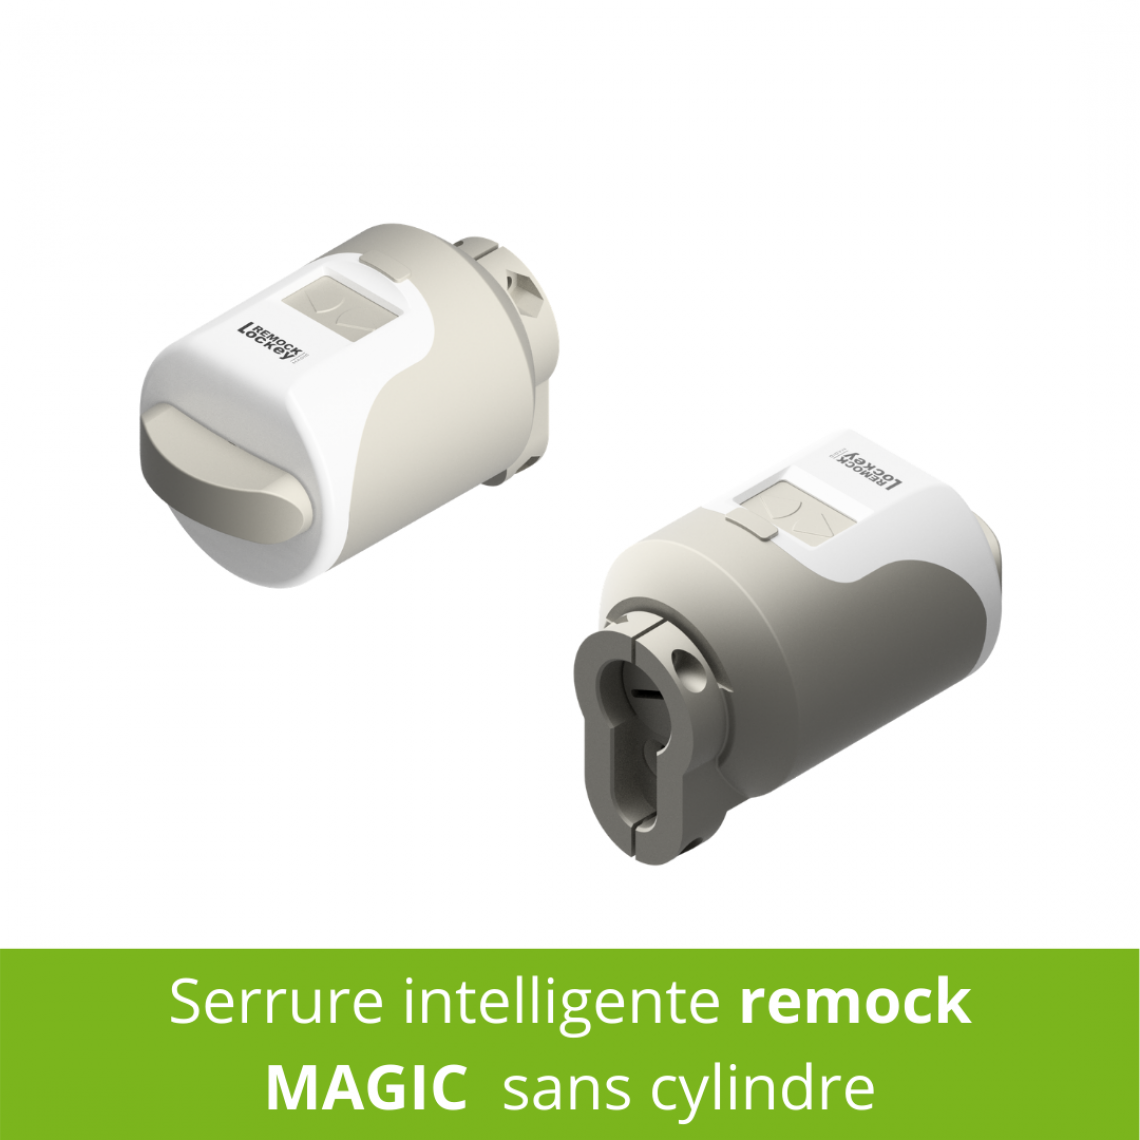 Remock Lockey - Serrure électronique intelligente remock MAGIC Universal - Accessoires de motorisation